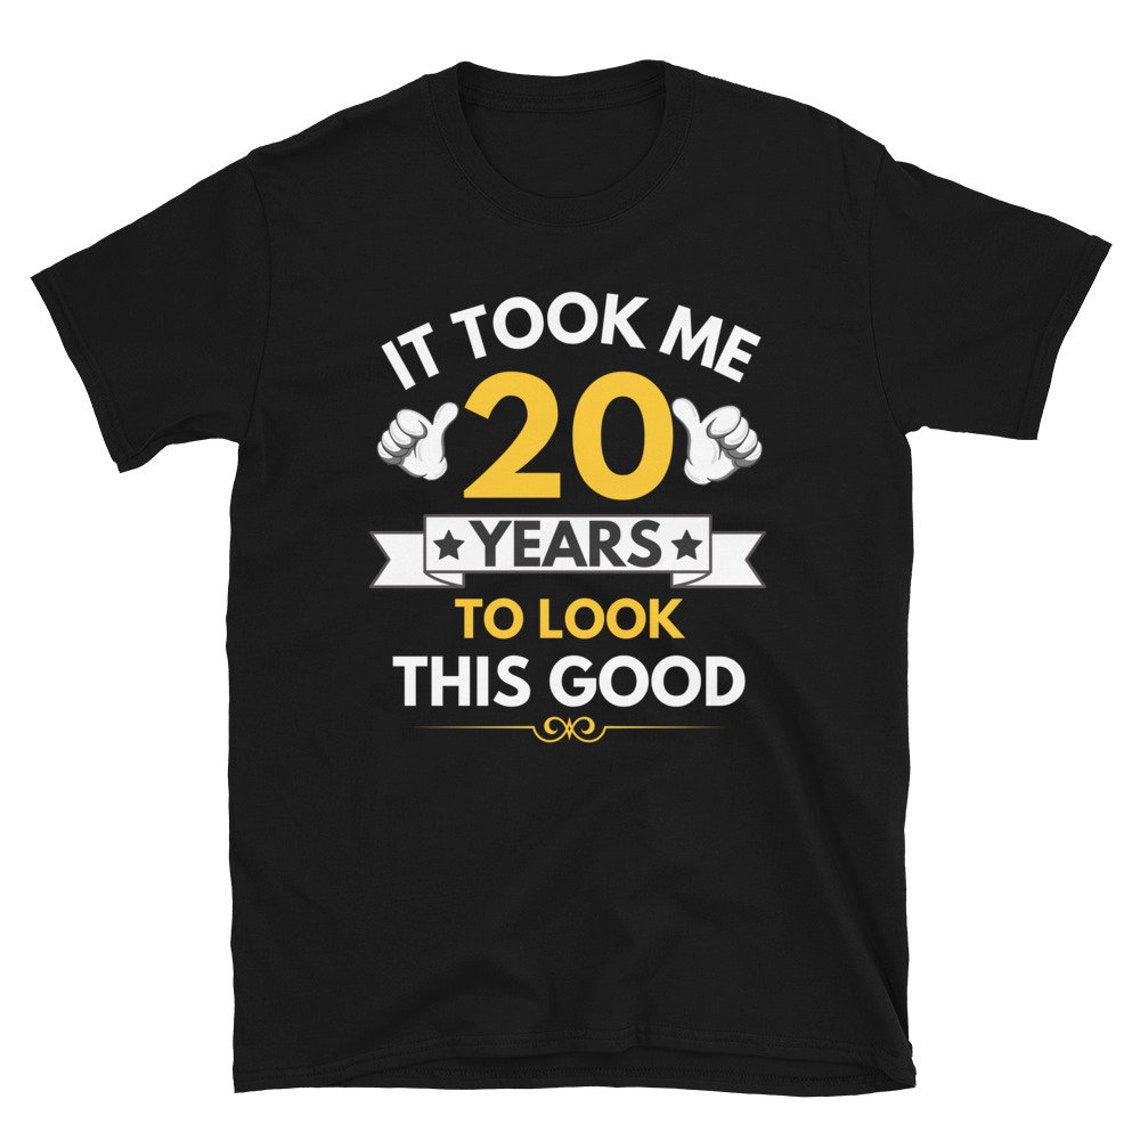 It took me 20 years to look this good Shirt Milestone Birthday Gift